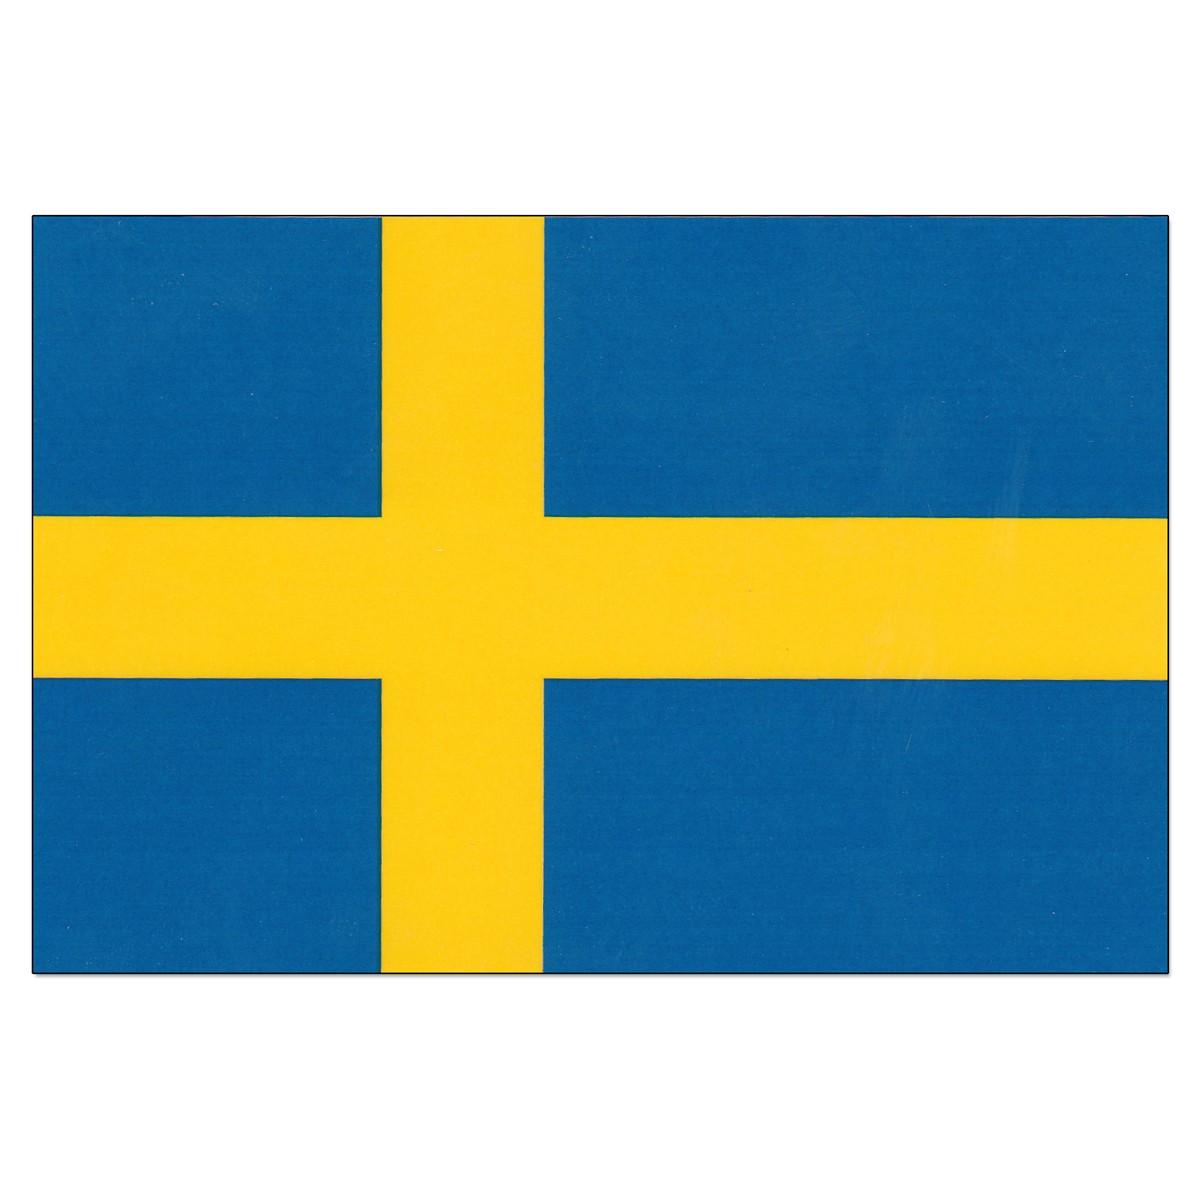 Sweden Flag Wallpaper